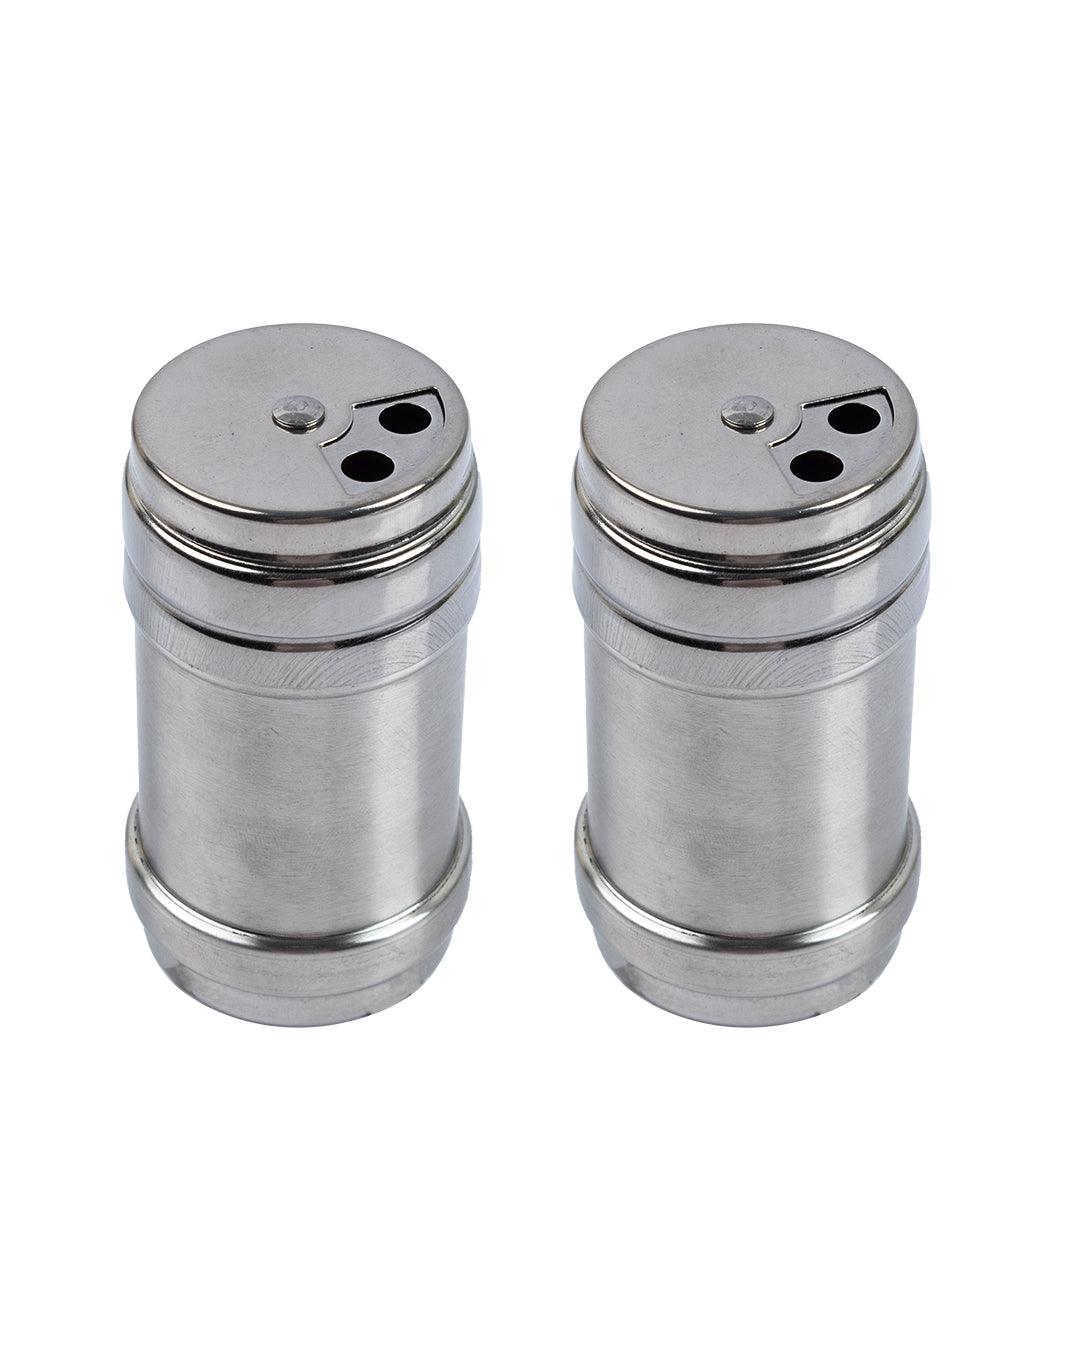 Metal Salt & Pepper Shakers, Silver, Stainless Steel, Set of 2 - MARKET 99